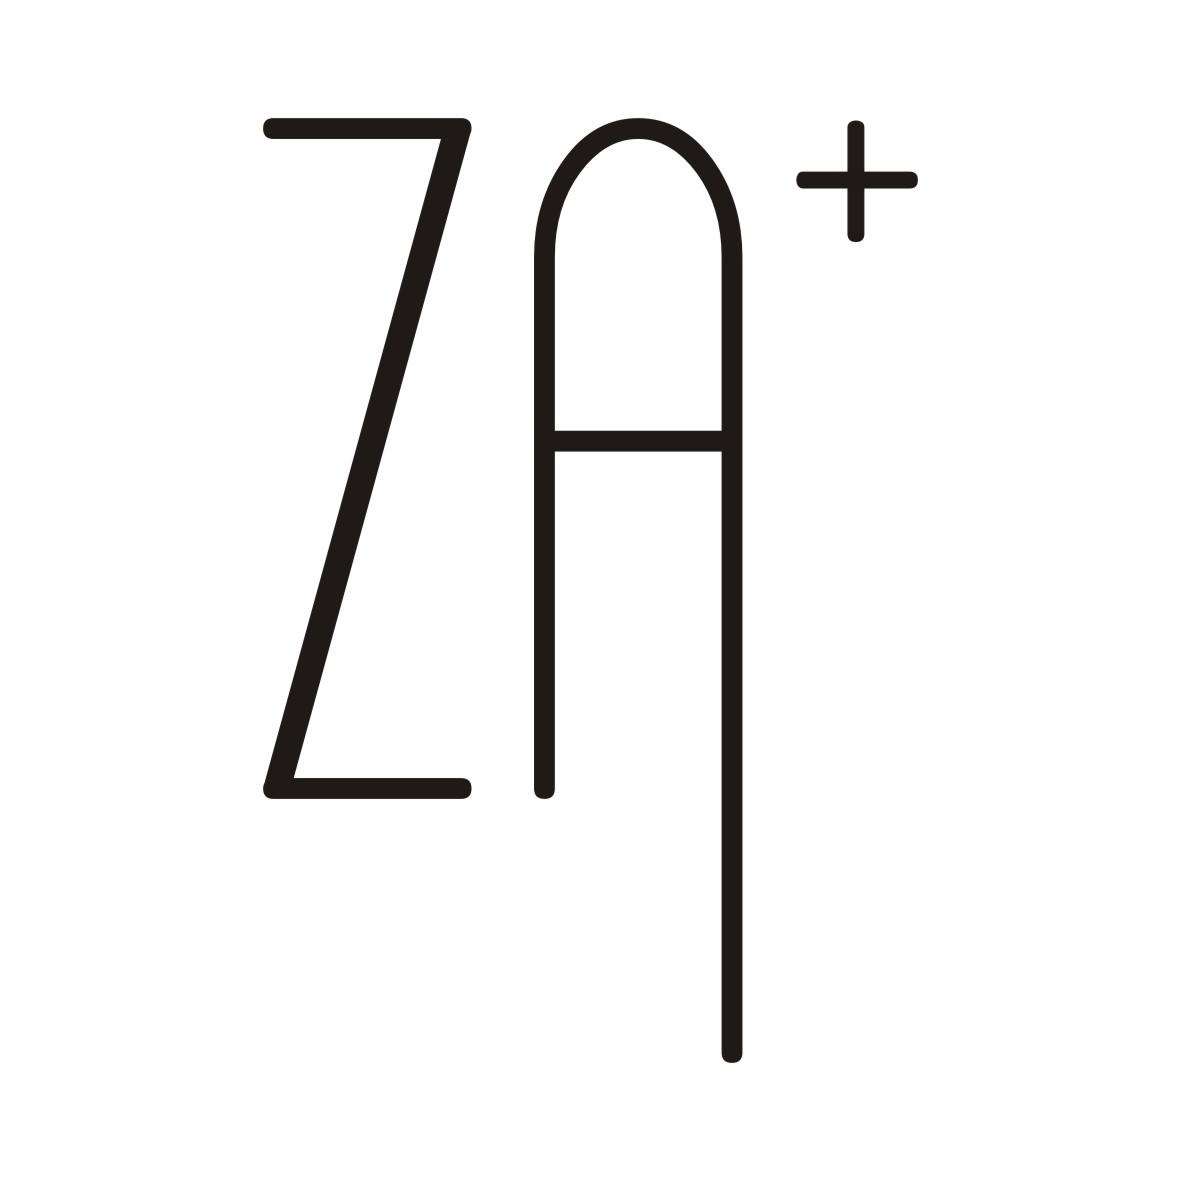 03类-日化用品ZA+商标转让